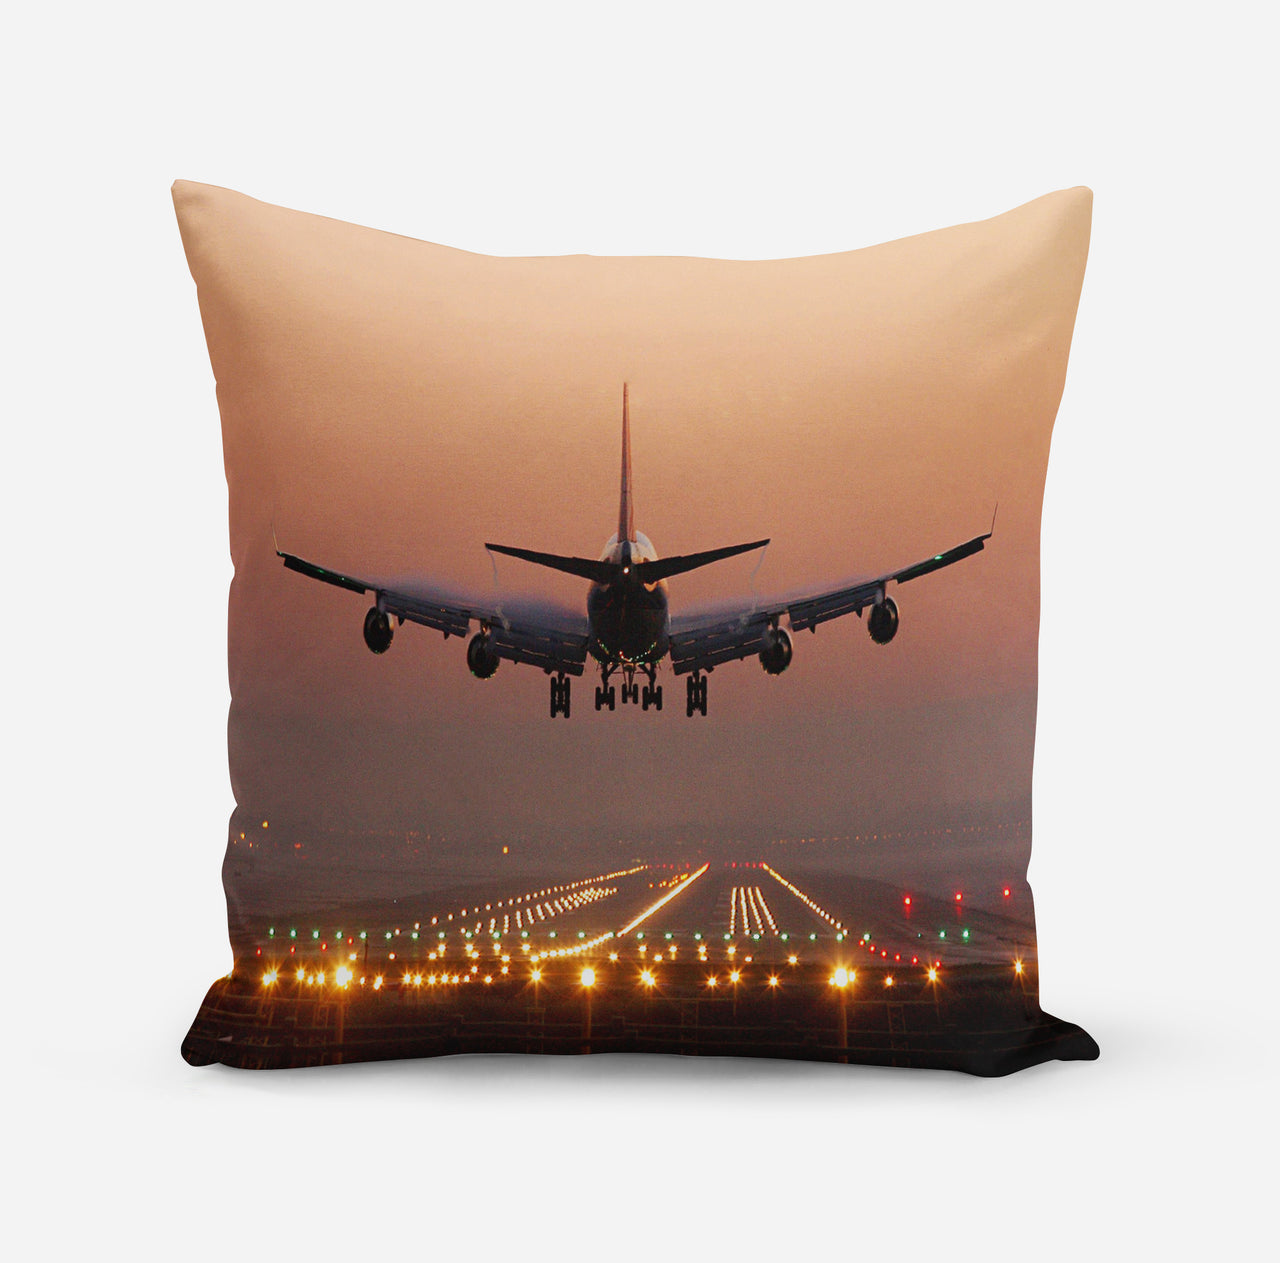 Landing Boeing 747 During Sunset Designed Pillows